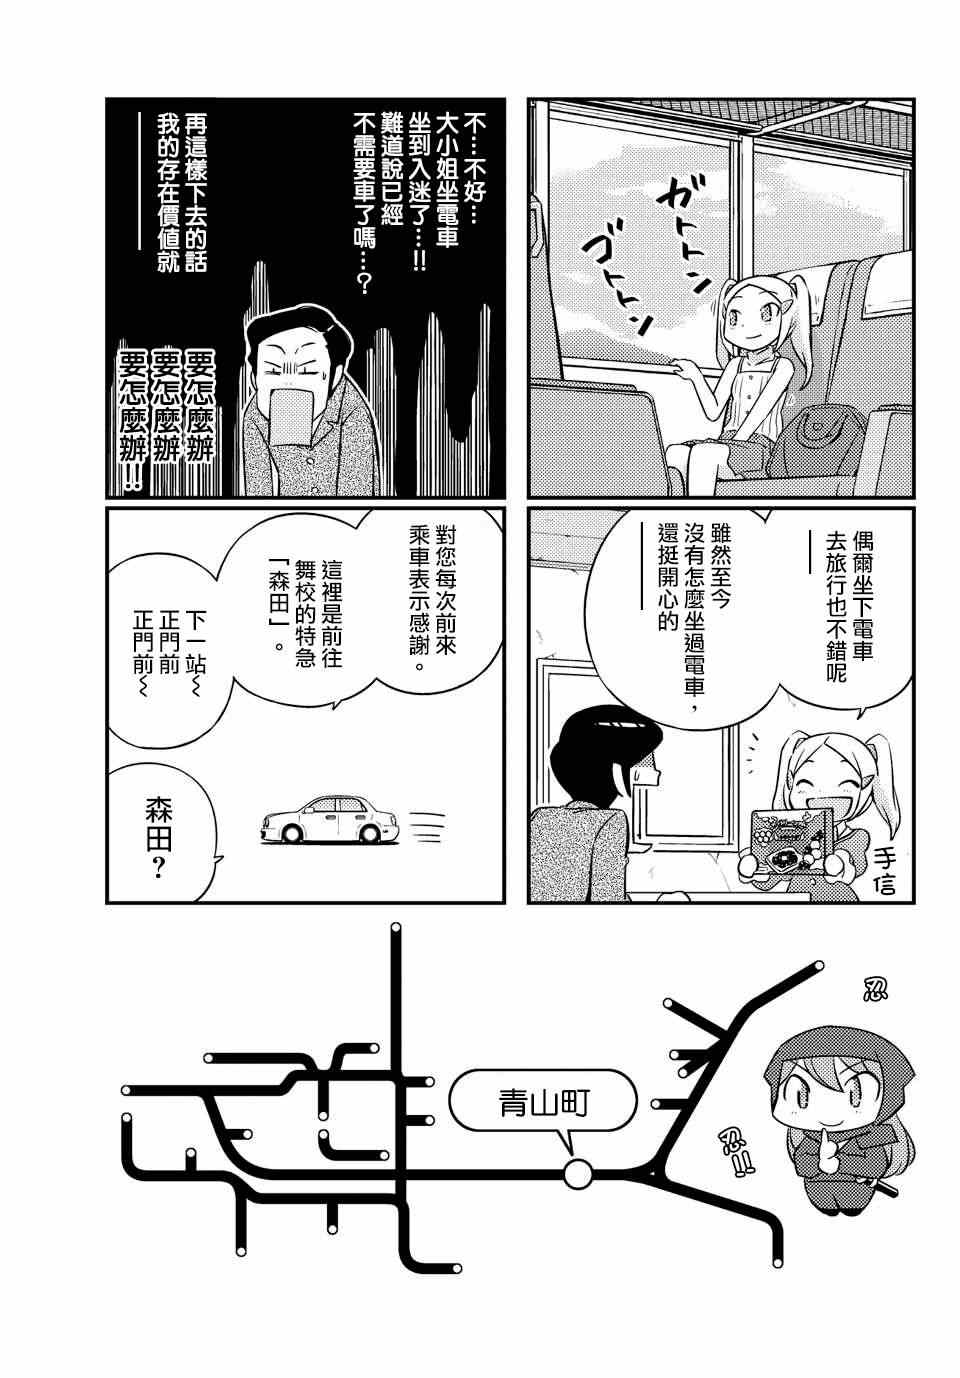 《只有神知道的世界》漫画 on the train 02集